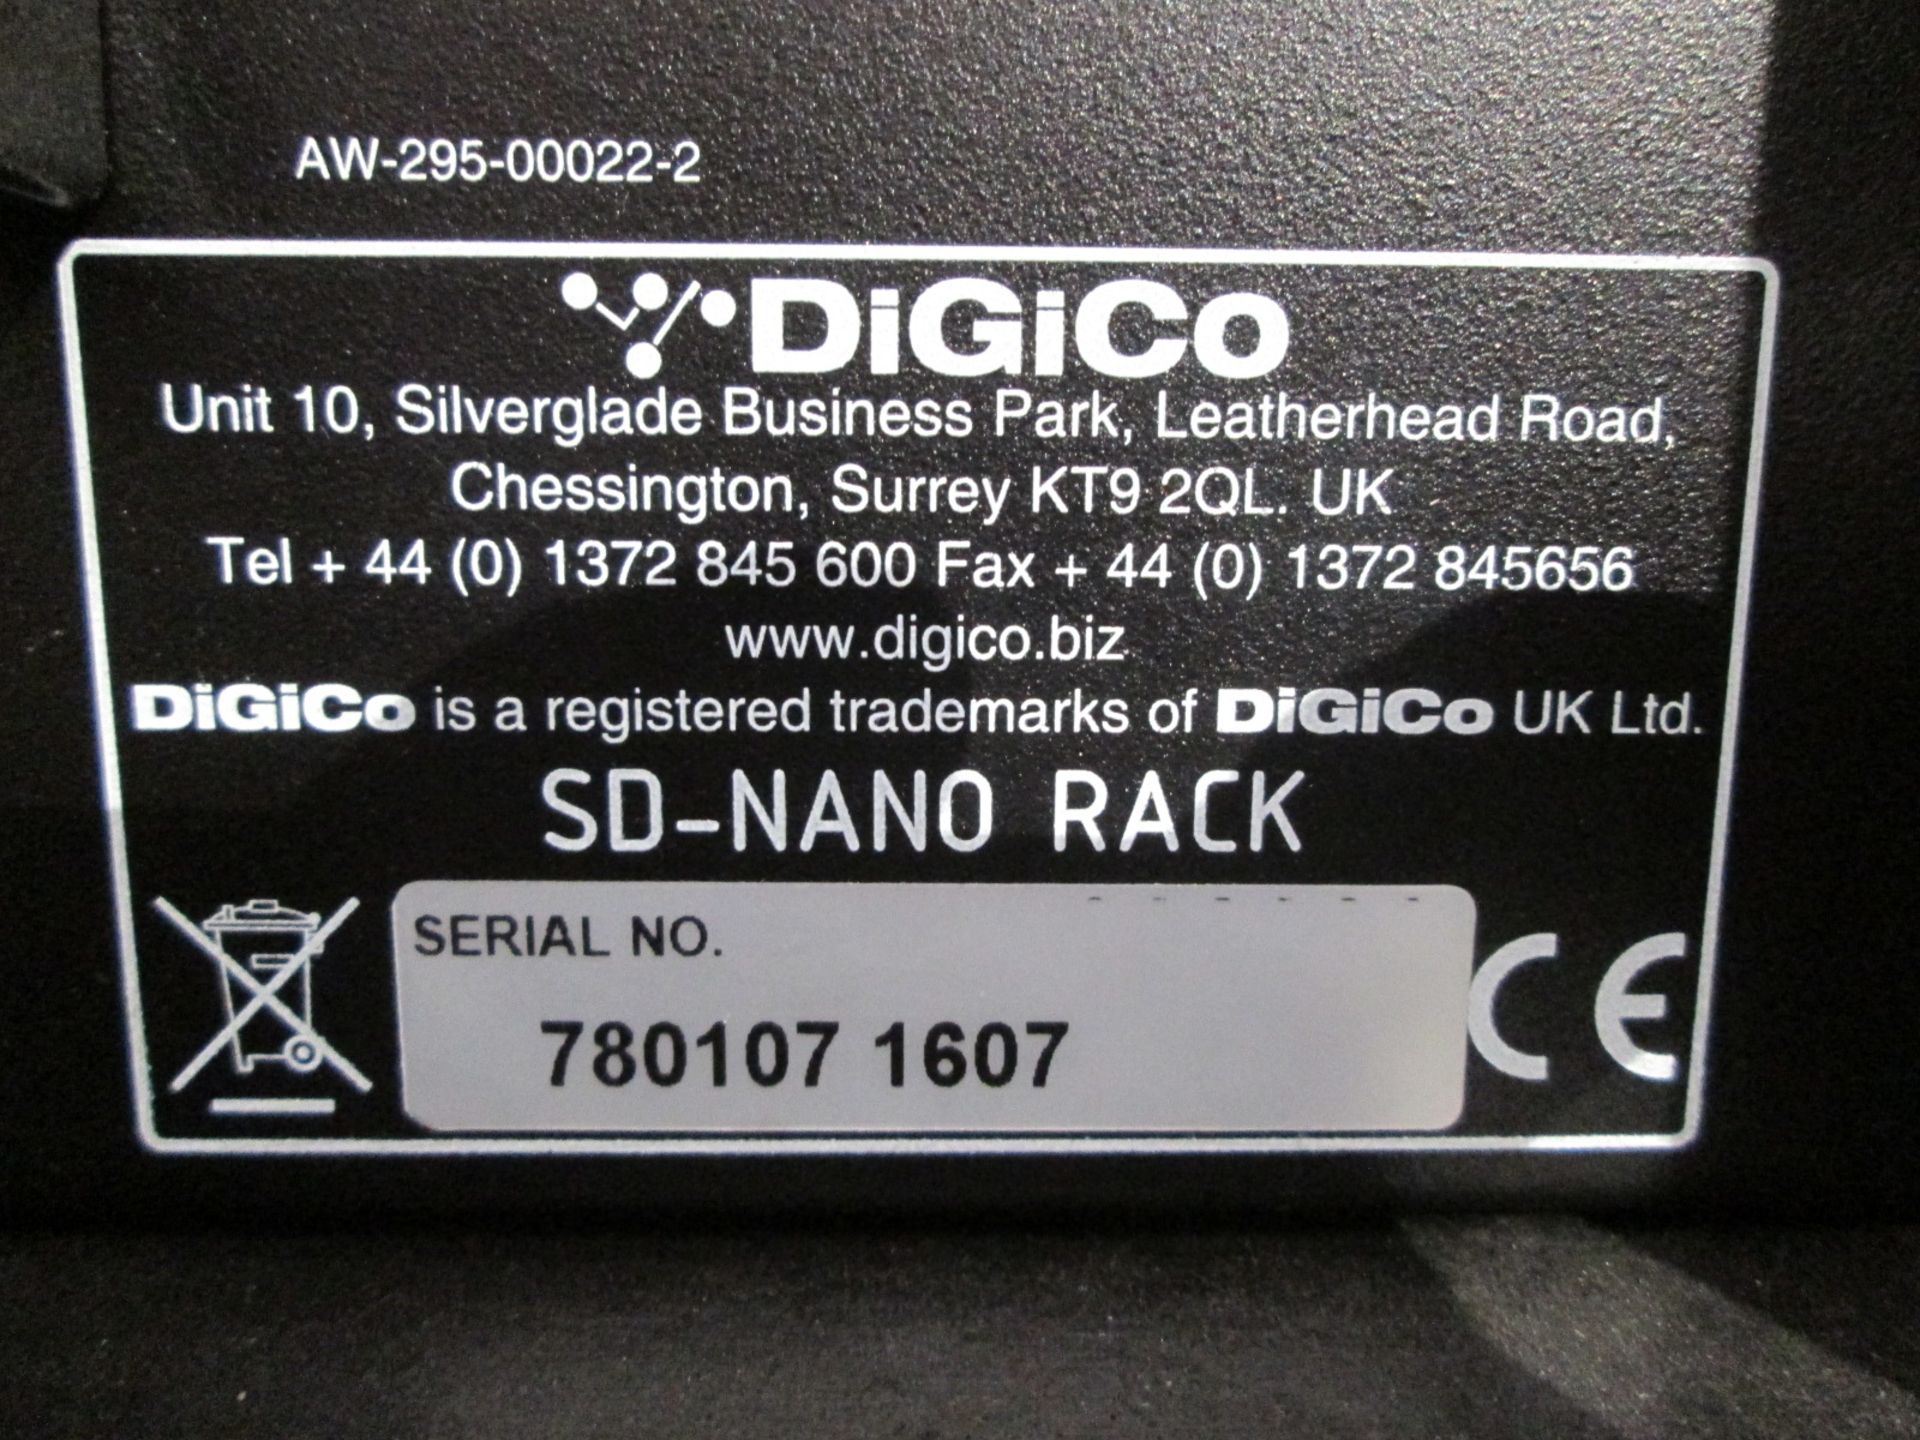 DigiCo SD-Nano Rack Input / Output Frame (2 slot). S/N 780107 1607 - Image 7 of 8